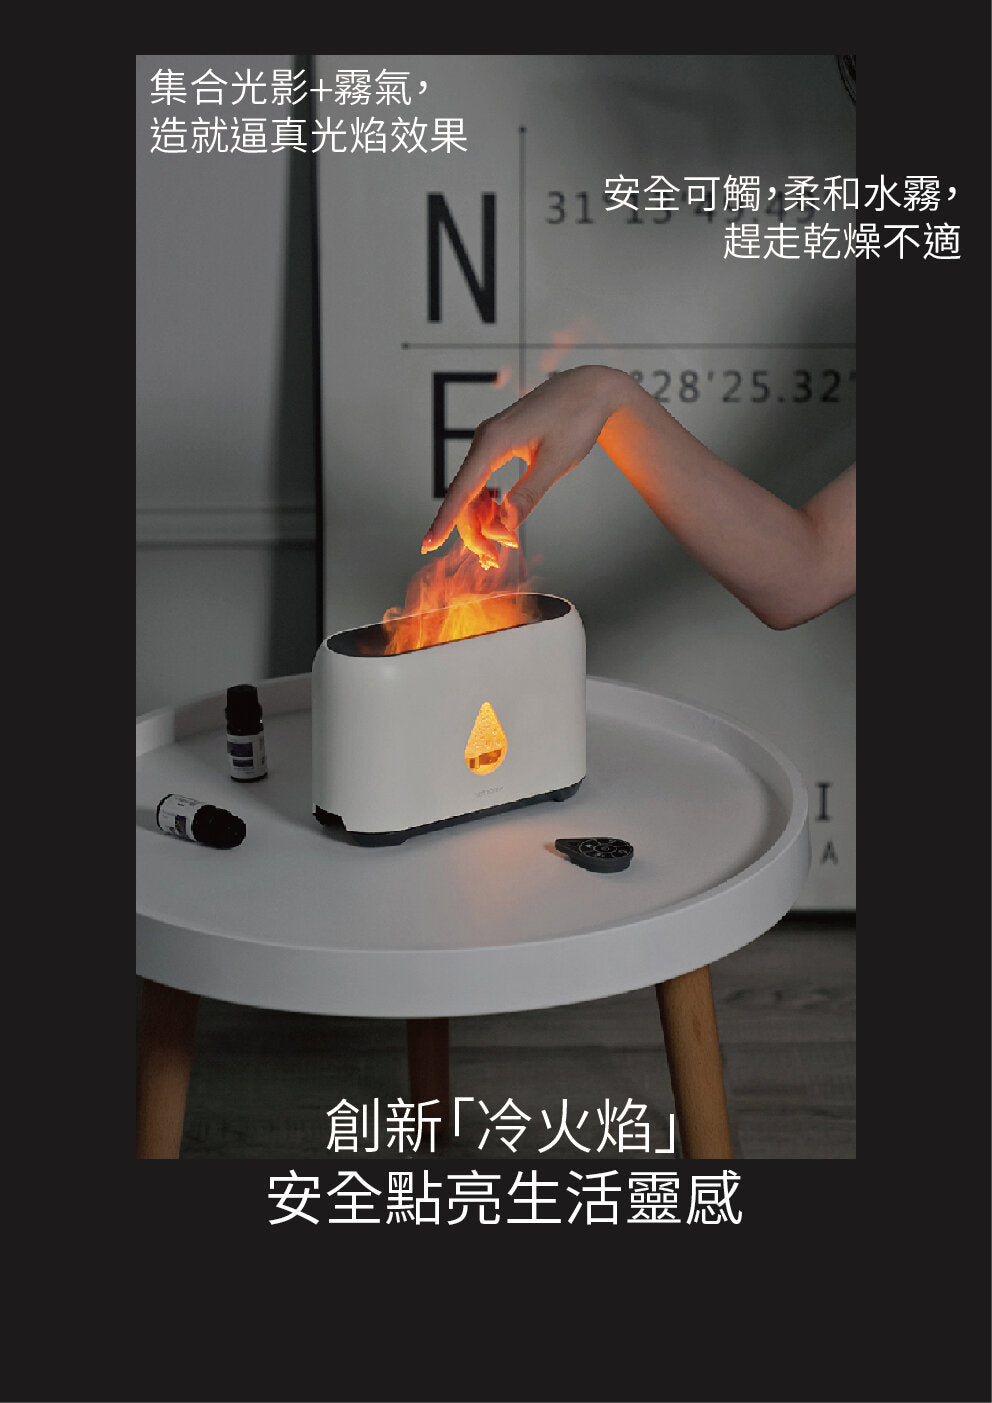 nathome - Flame Aromatherapy Humidifier NJH18 [Hong Kong Licensed]